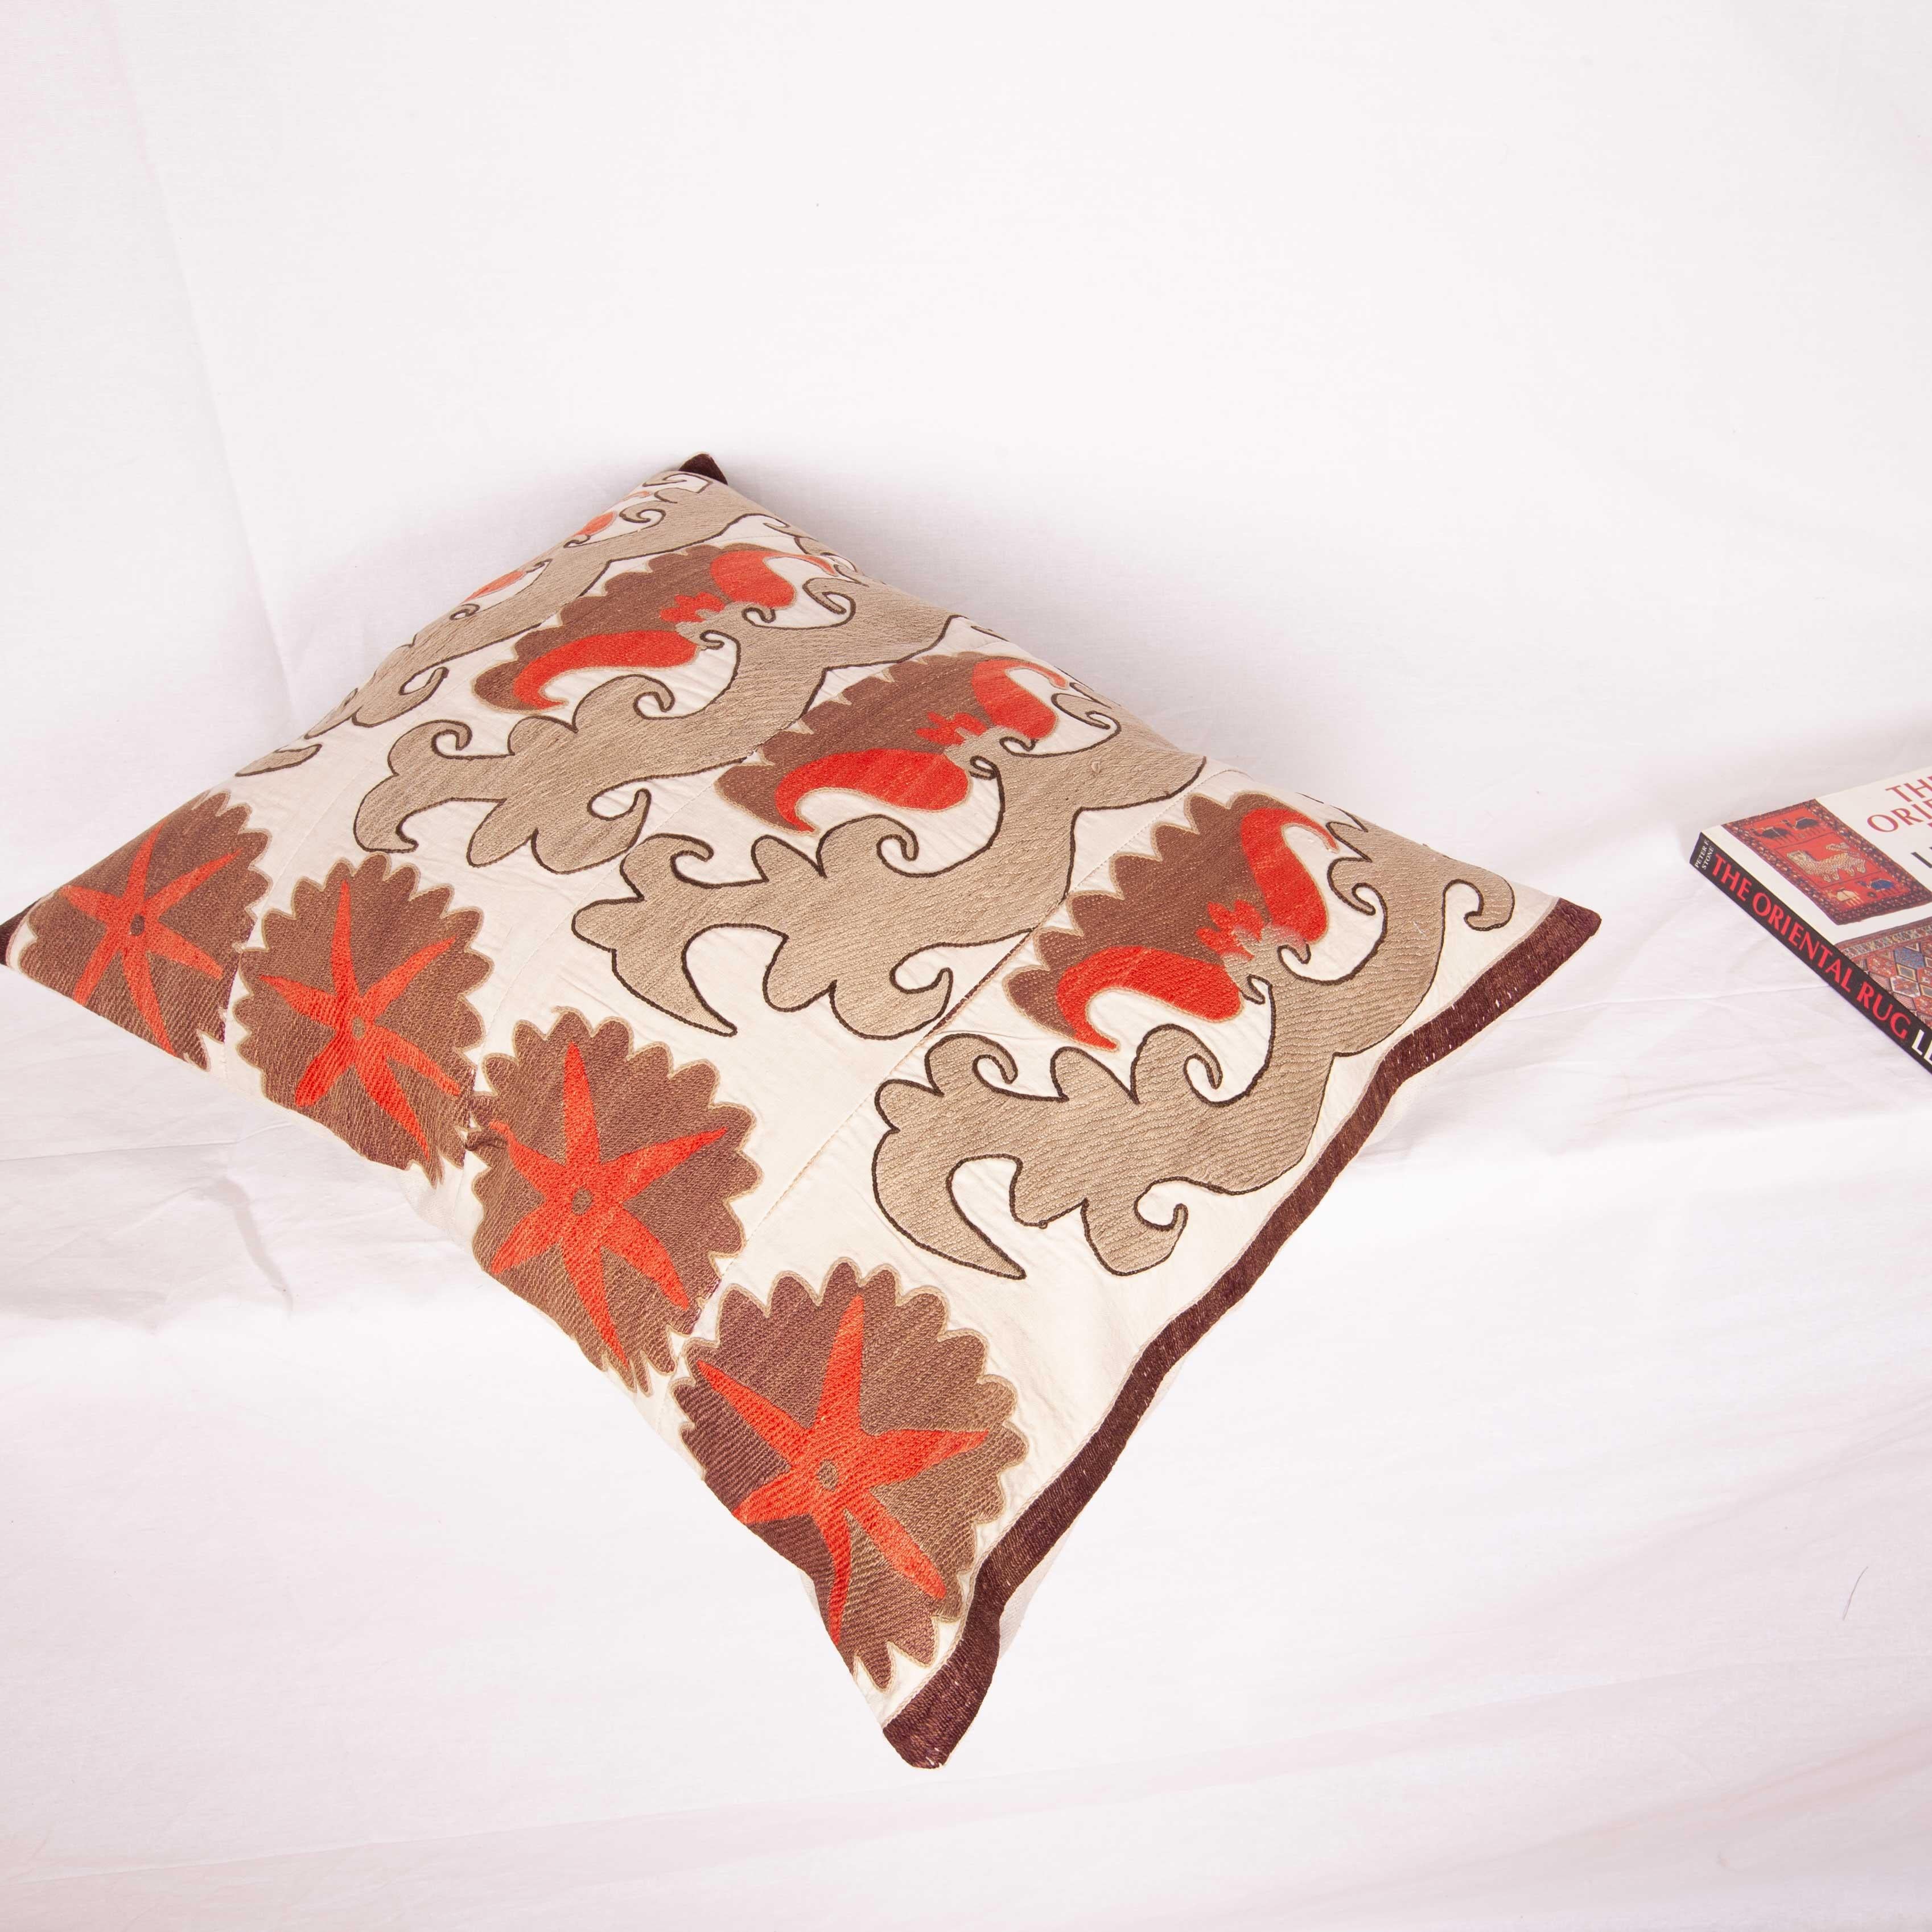 Cotton Suzani Pillow Case Fashioned from an Early 20th Century Uzbek Suzani